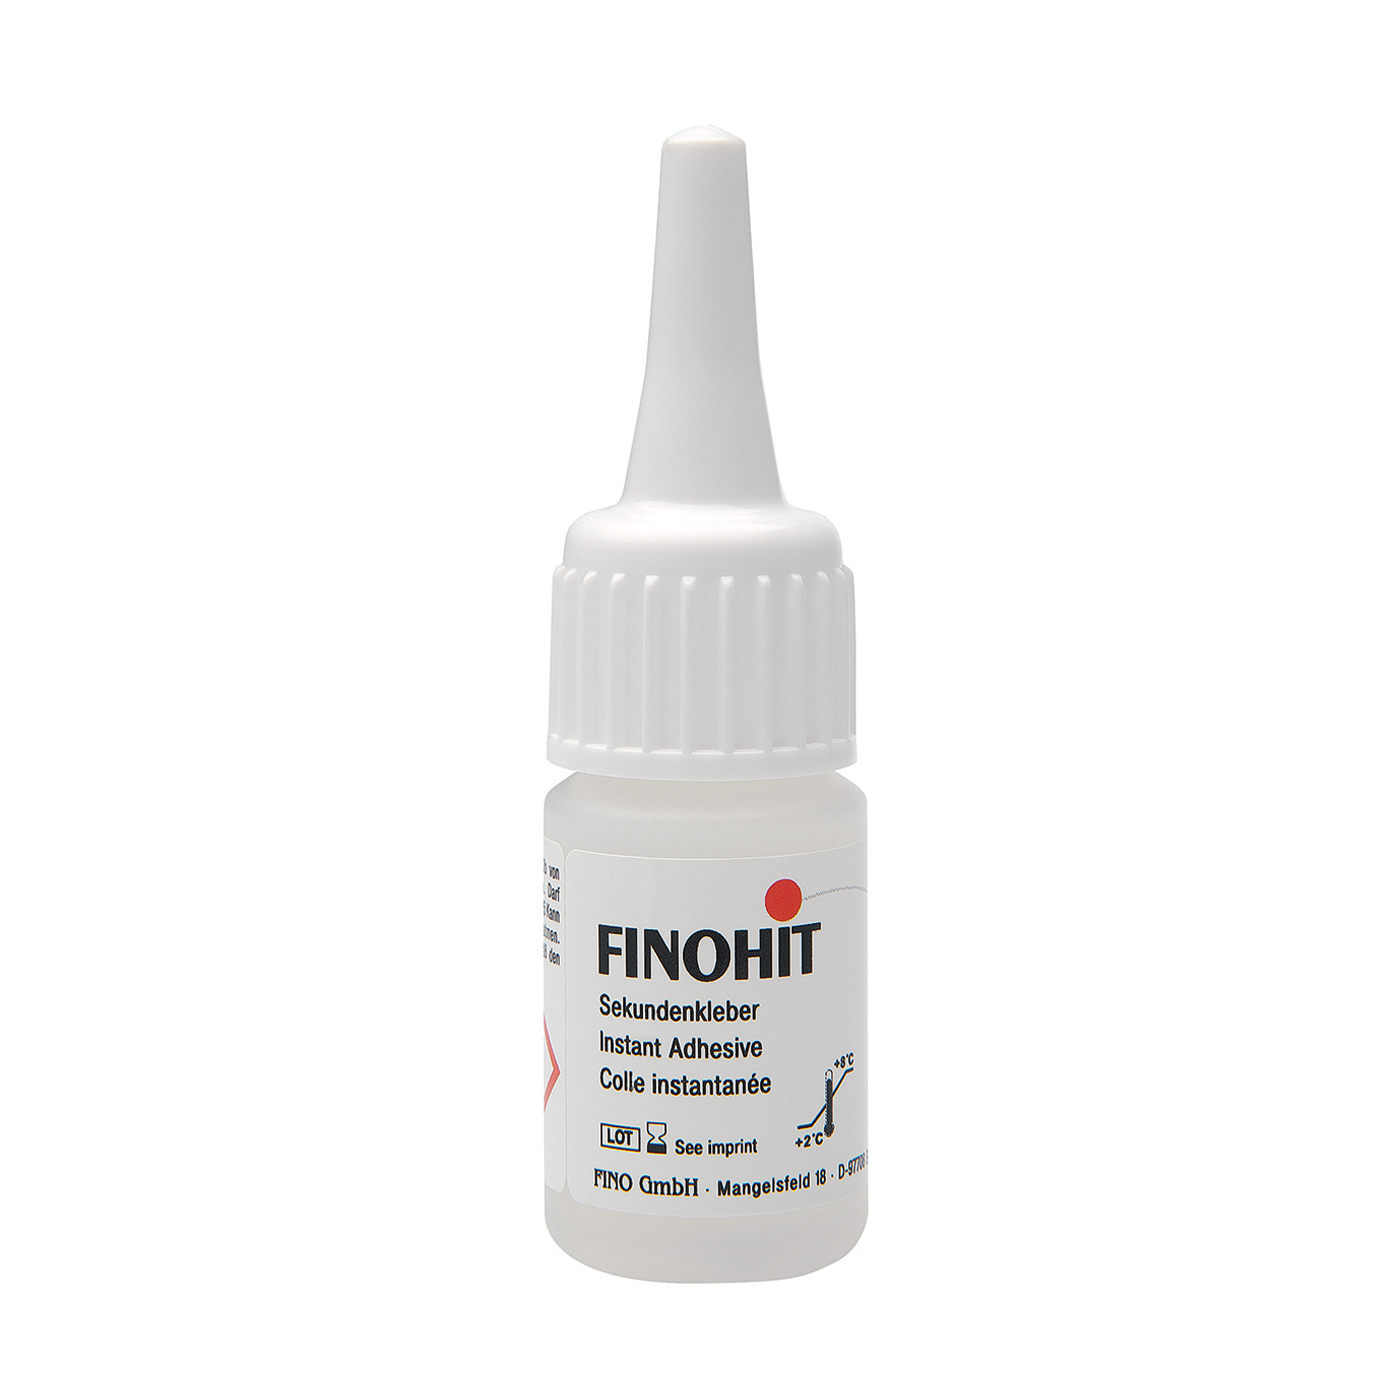 FINOHIT Instant Adhesive - 10 g